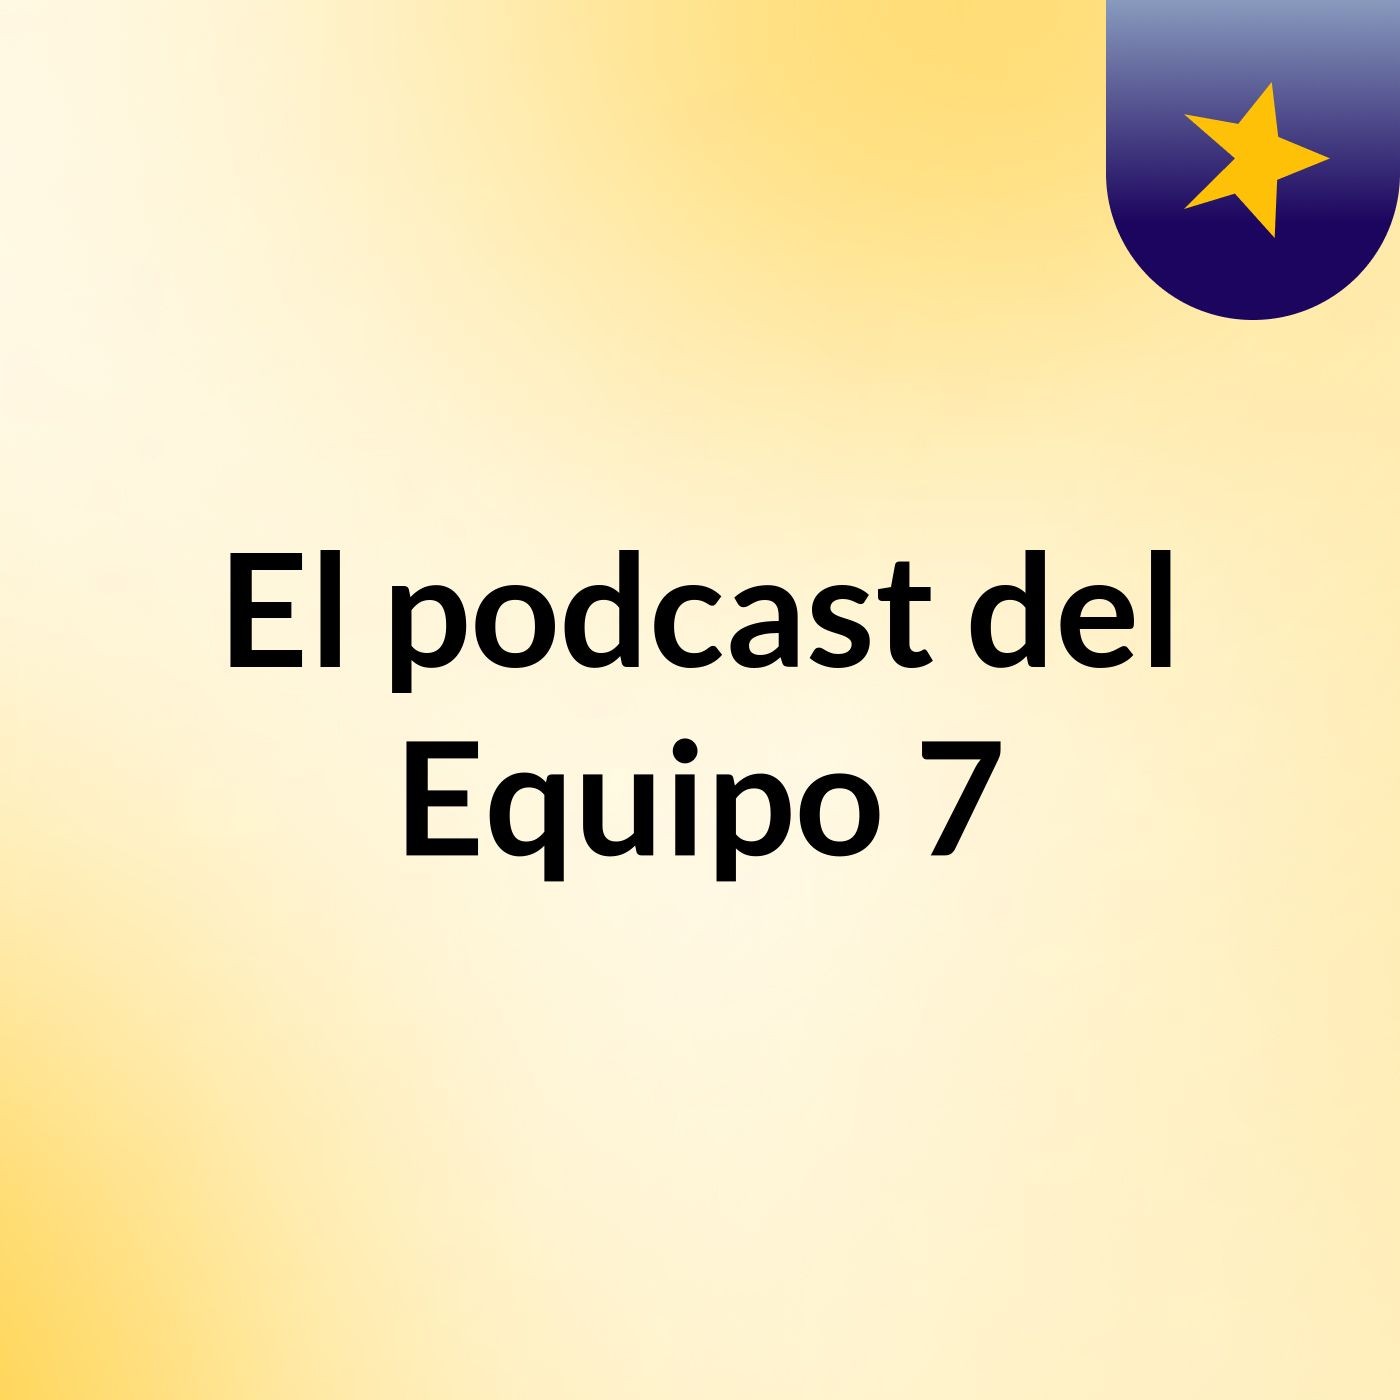 El podcast del Equipo 7